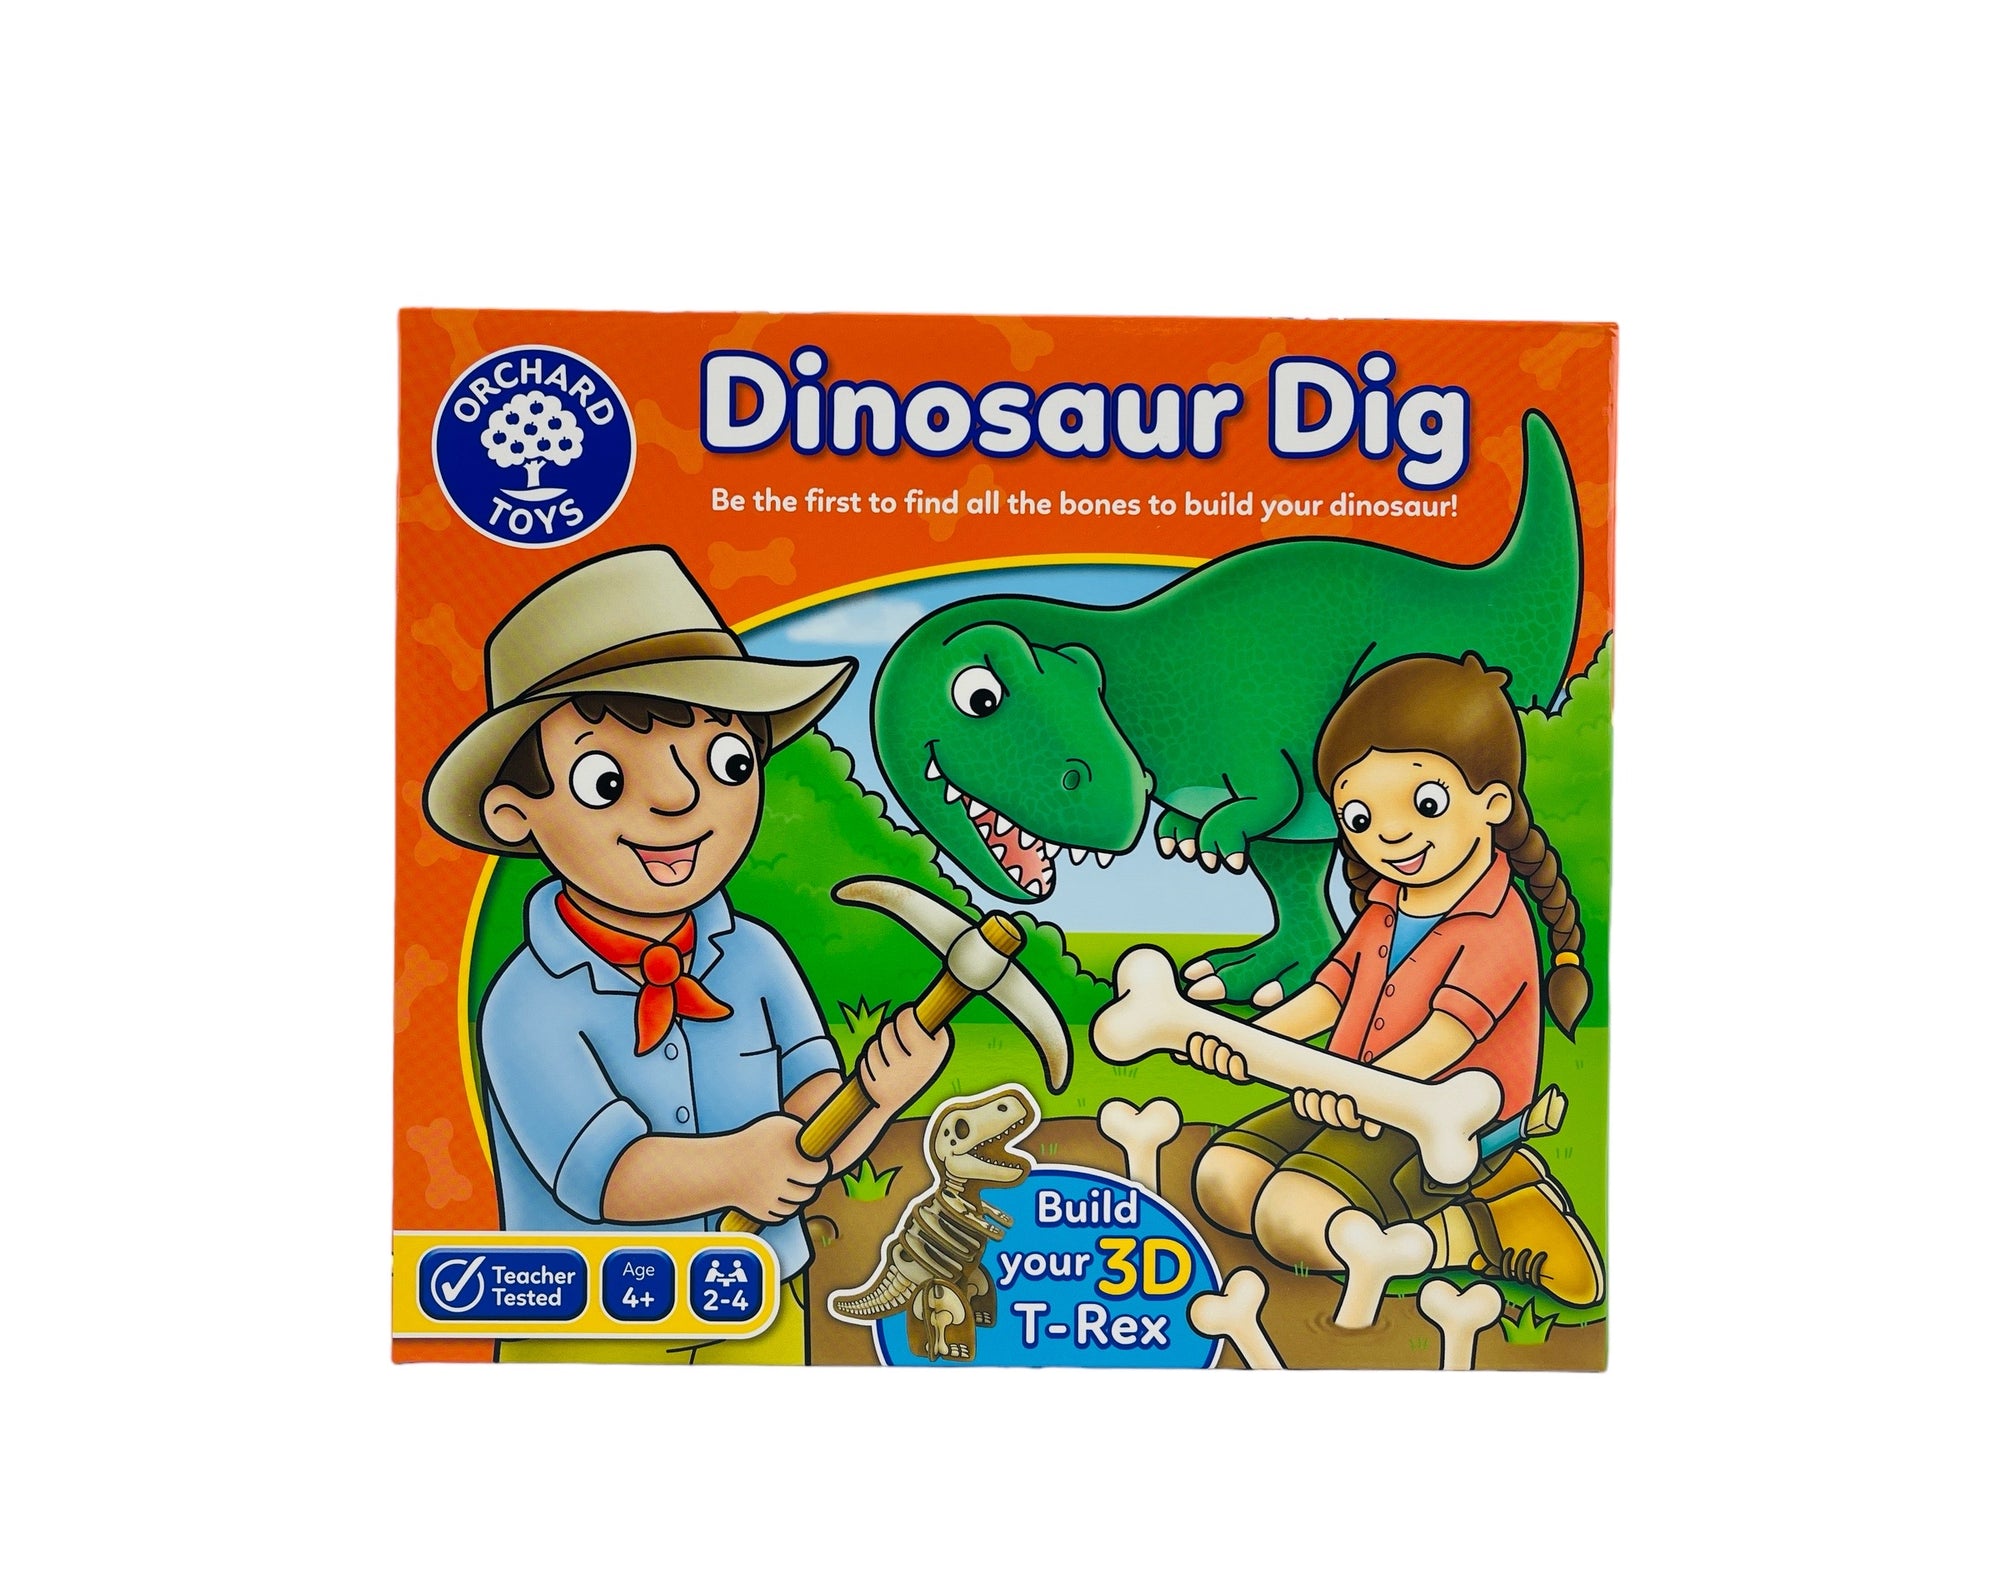 Orchard Dinosaur Dig game